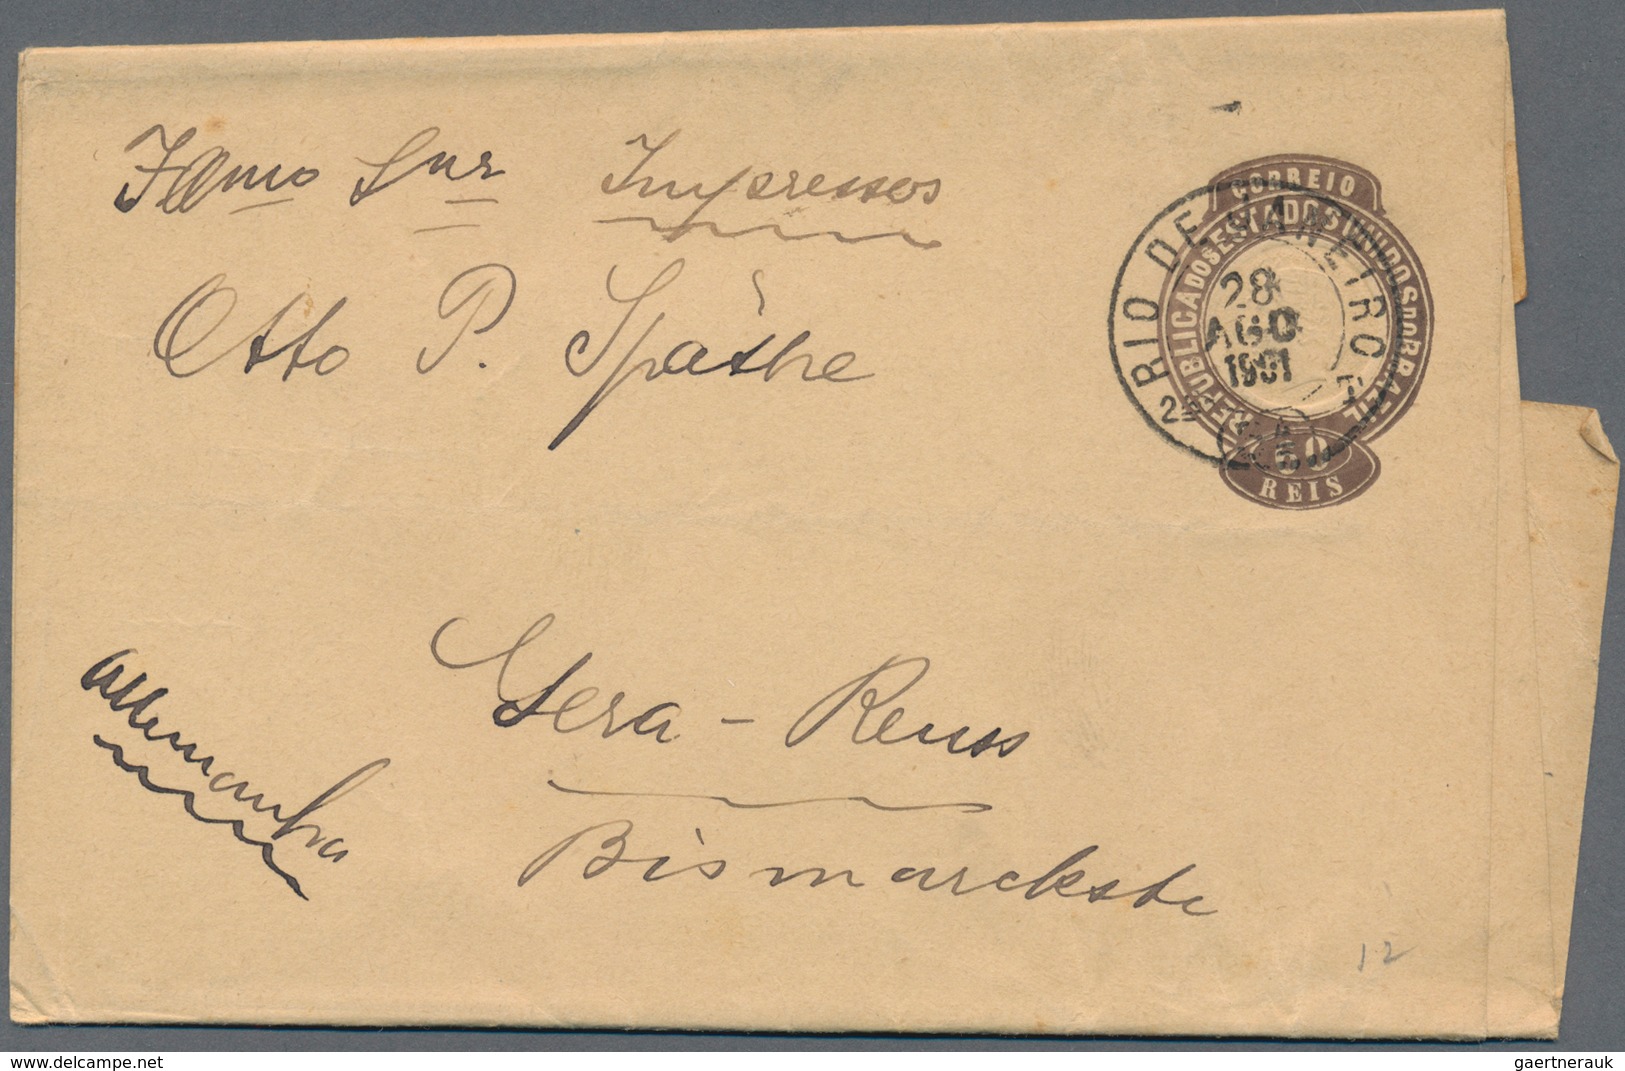 Brasilien - Ganzsachen: 1885/1936, mostly used stationery envelopes, cards, wrappers, letter cards: